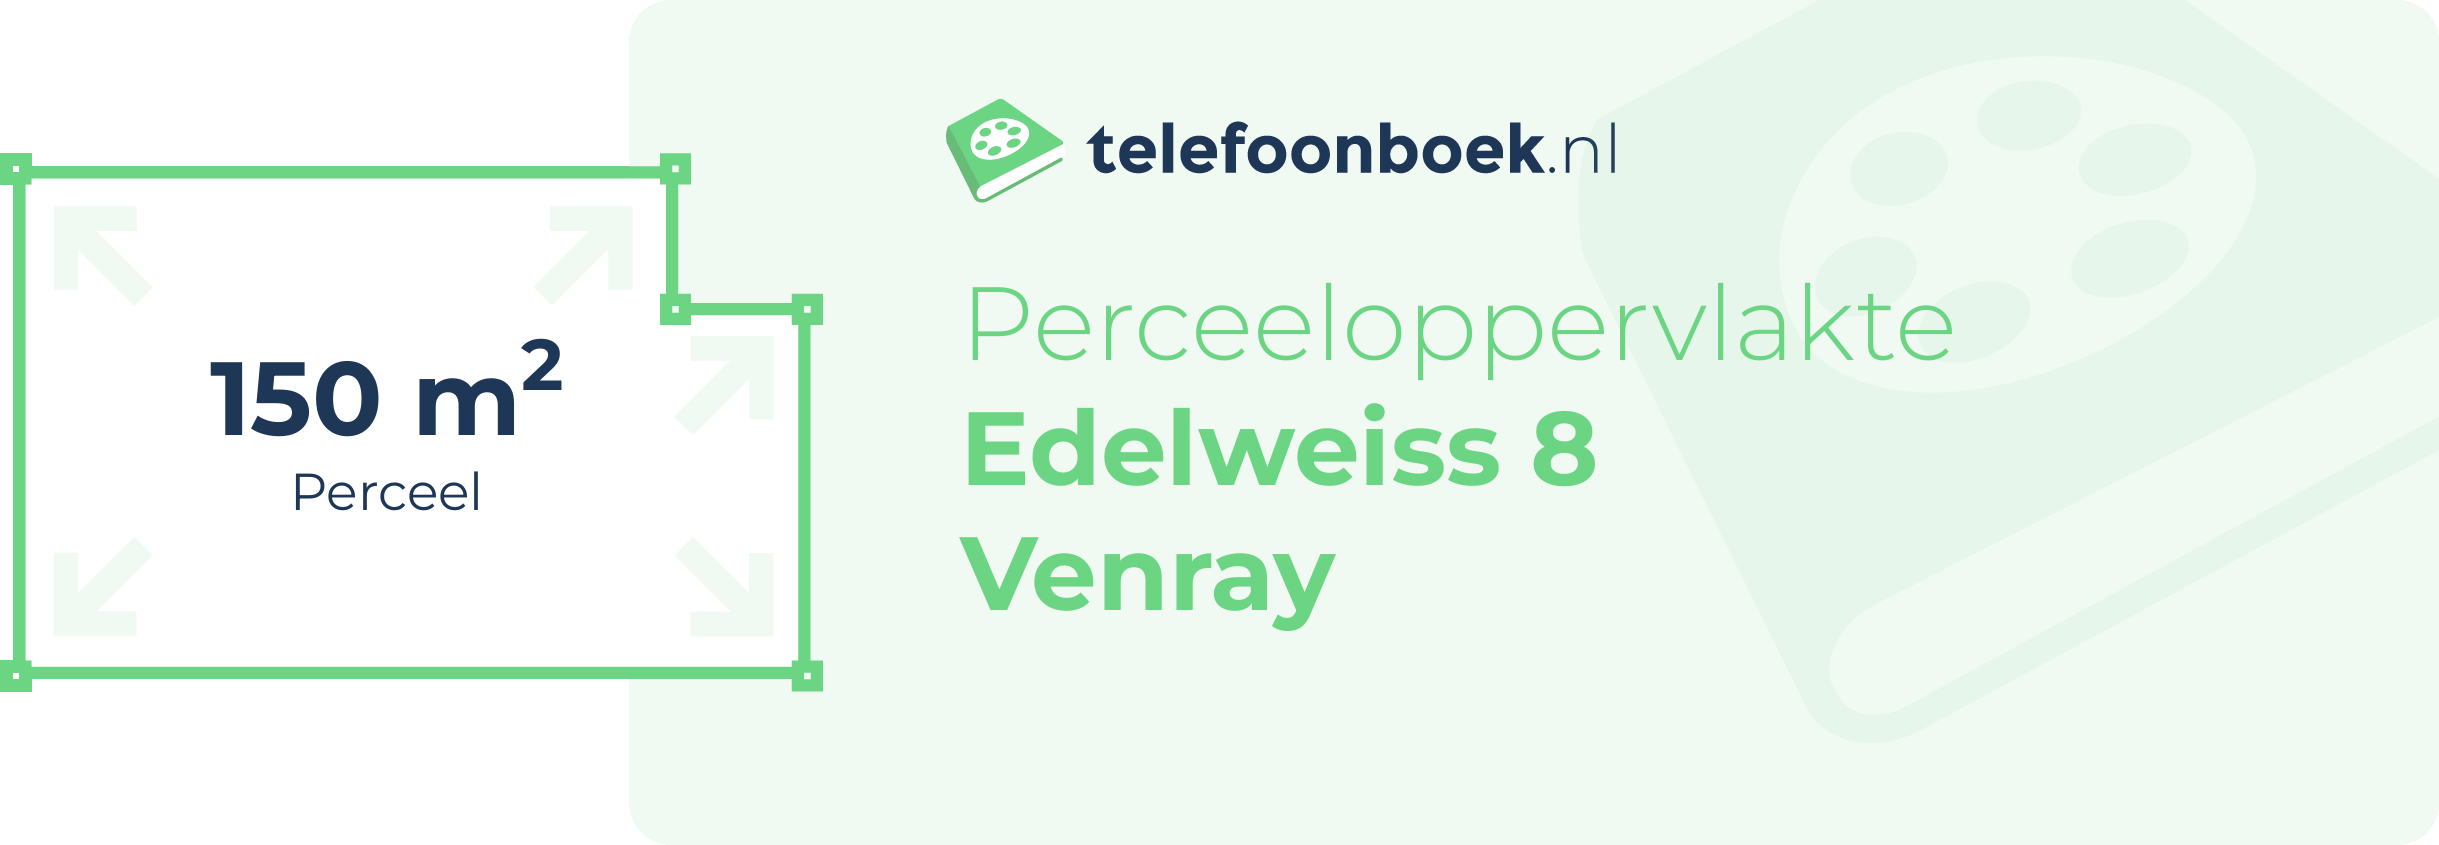 Perceeloppervlakte Edelweiss 8 Venray